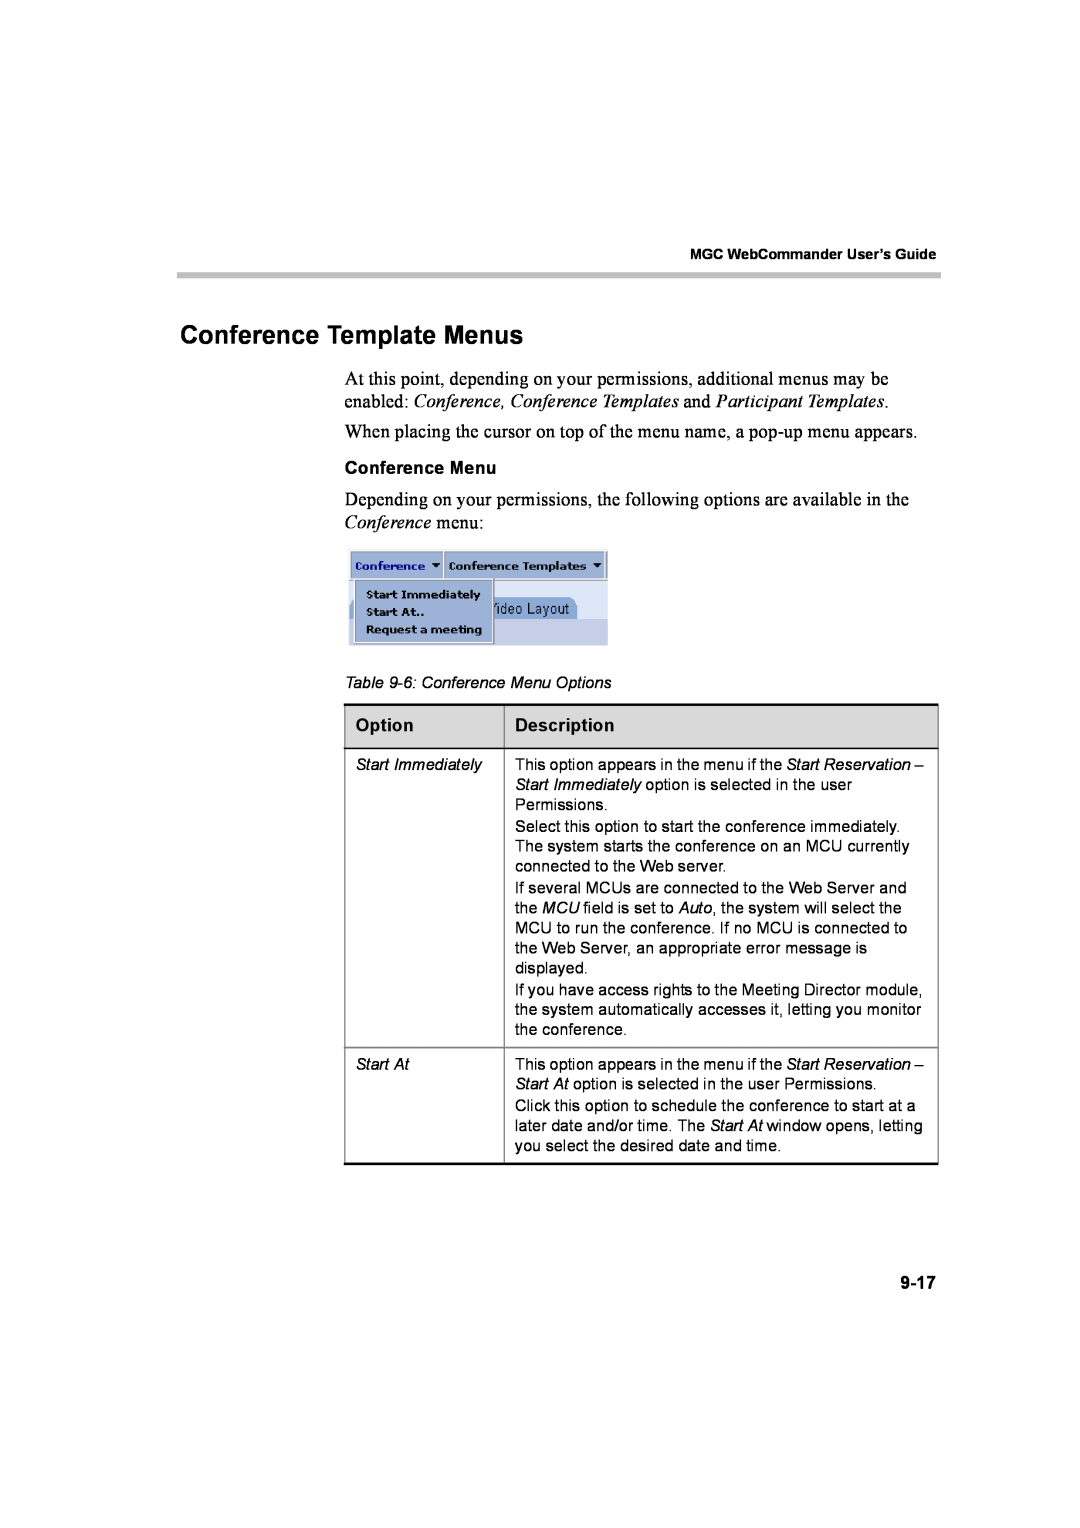 Polycom 8 manual Conference Template Menus, Conference menu 